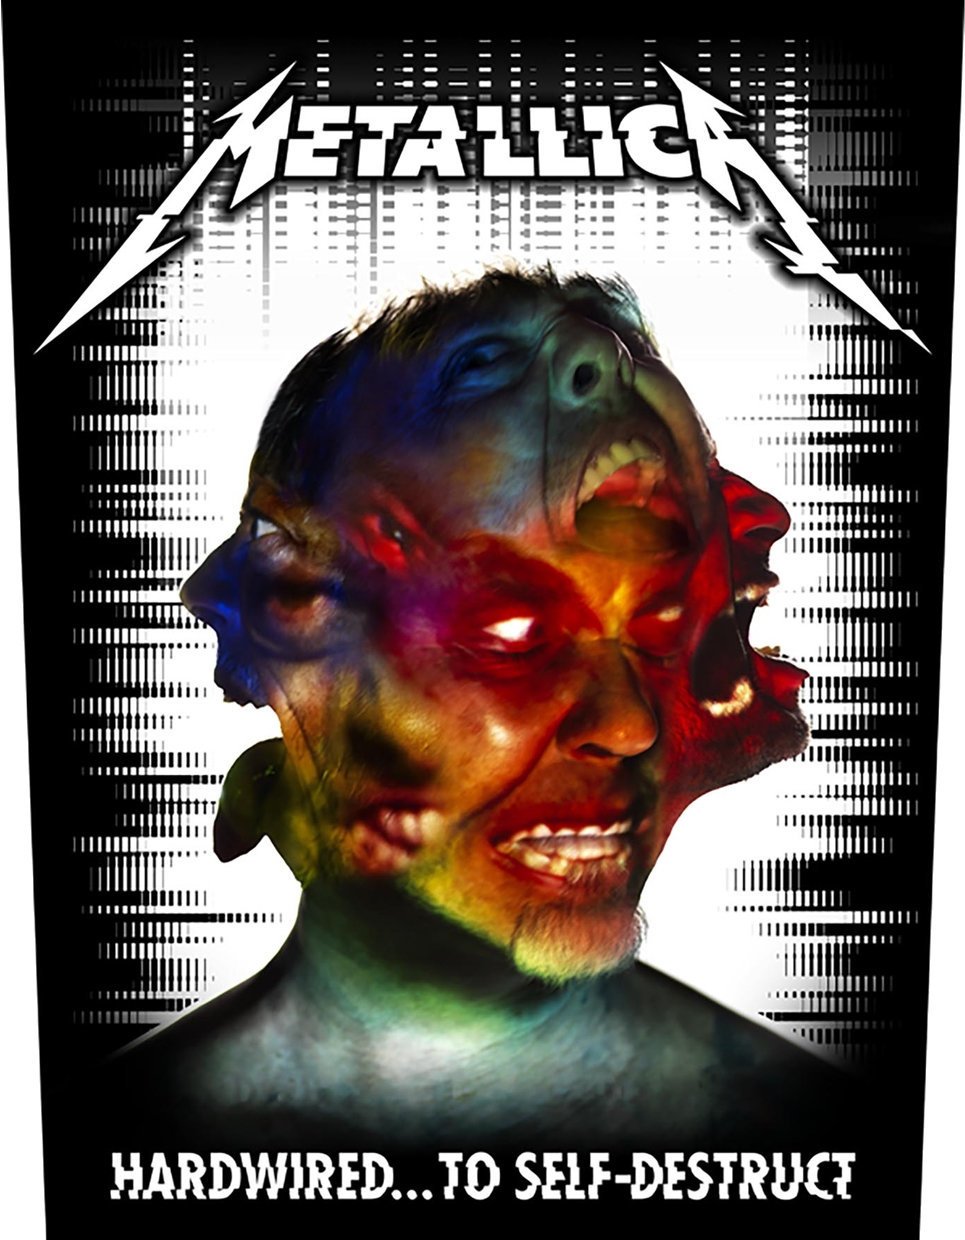 Patch-uri Metallica Hardwired To Self Destruct Patch-uri